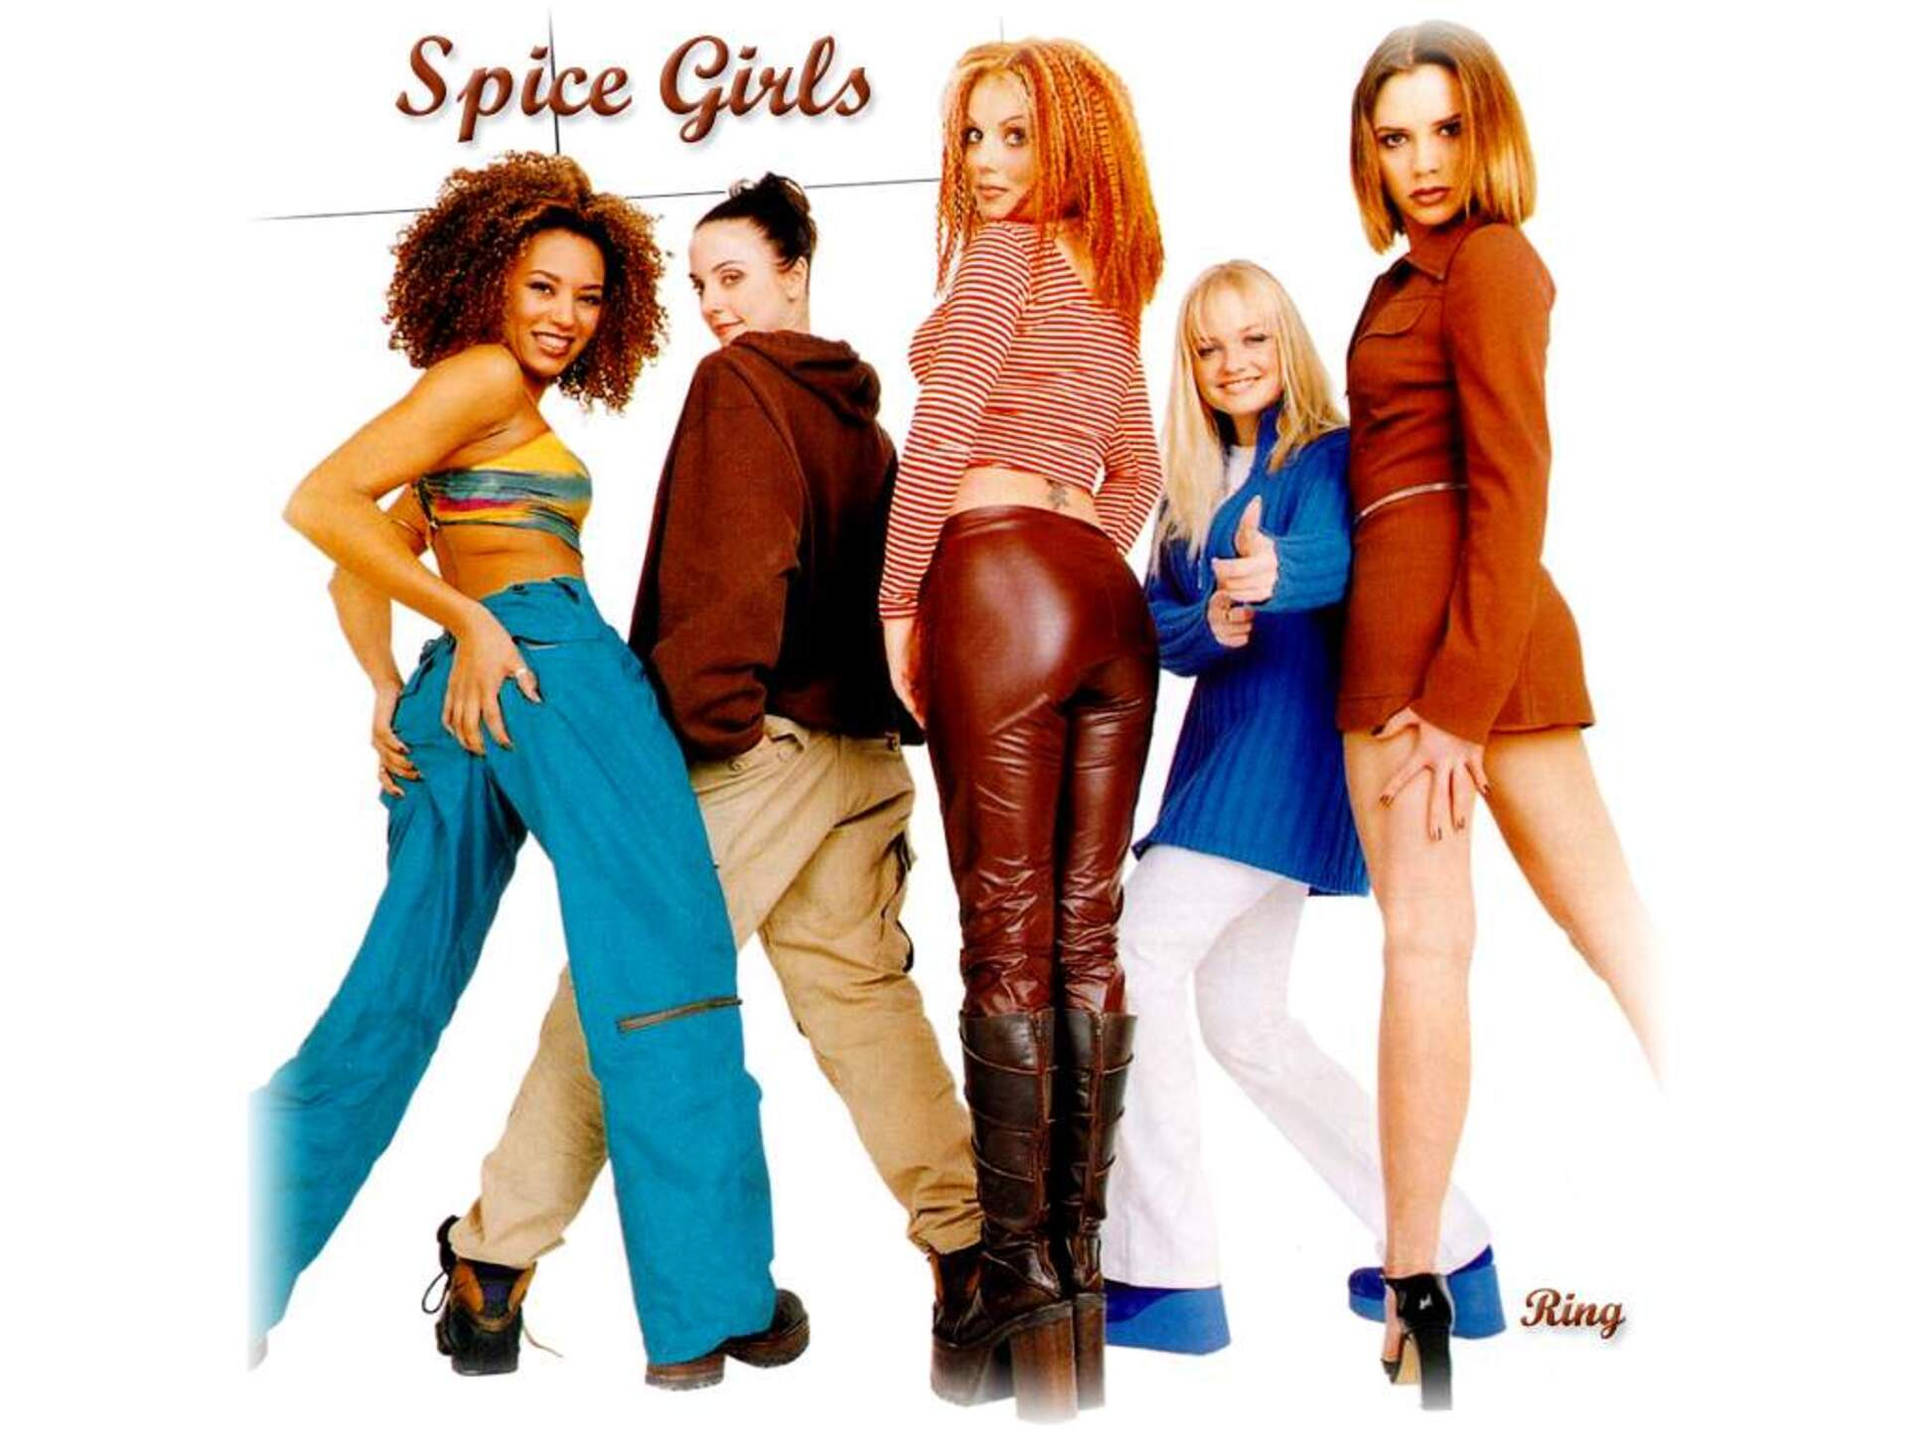 Spice Girls Pop Album Cover